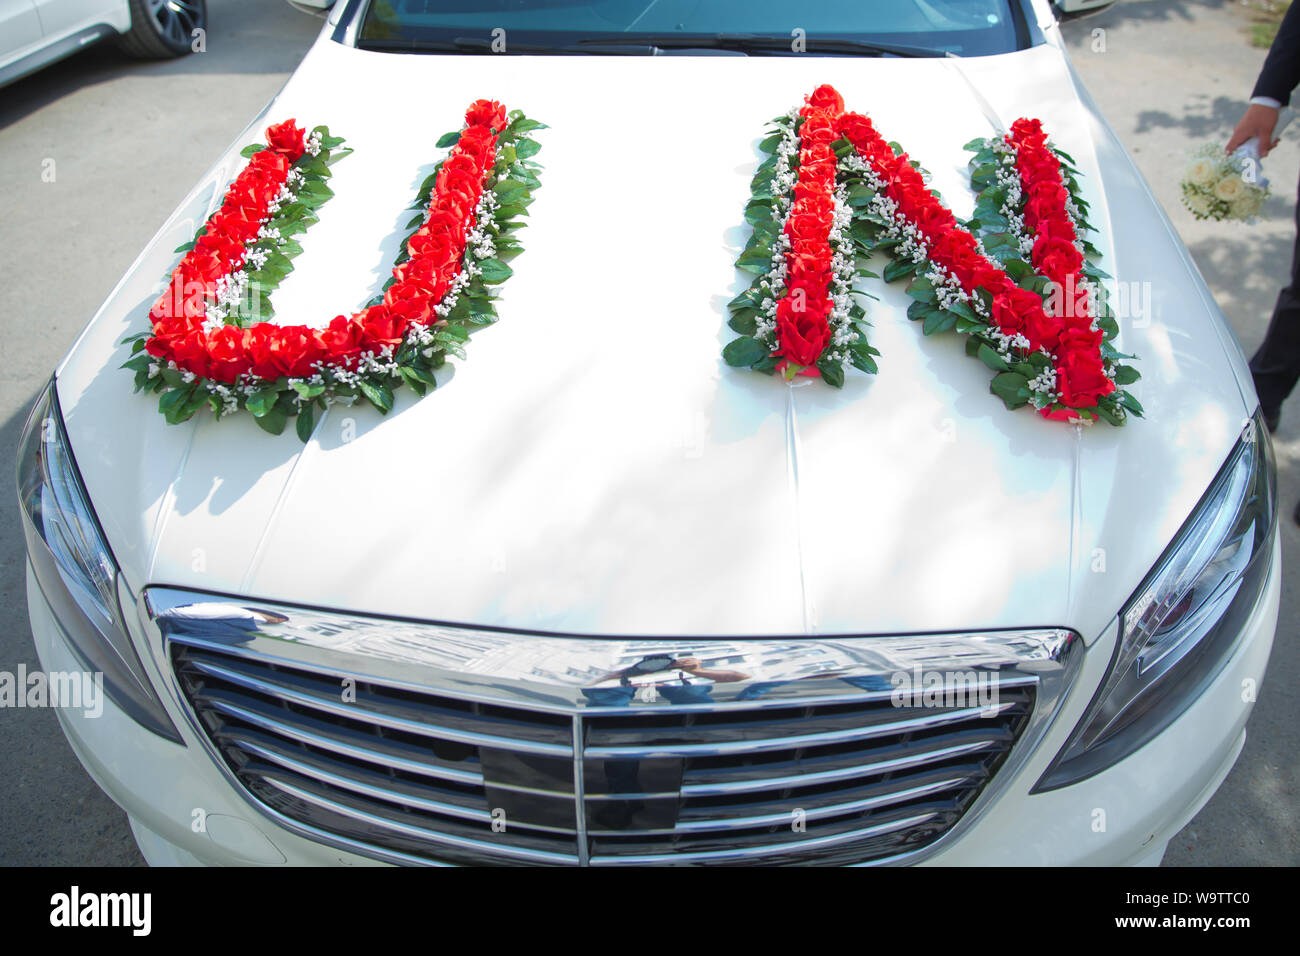 20 Best Wedding Car Decoration Ideas In India 2023  Wedding car decorations,  Wedding car deco, Car decor